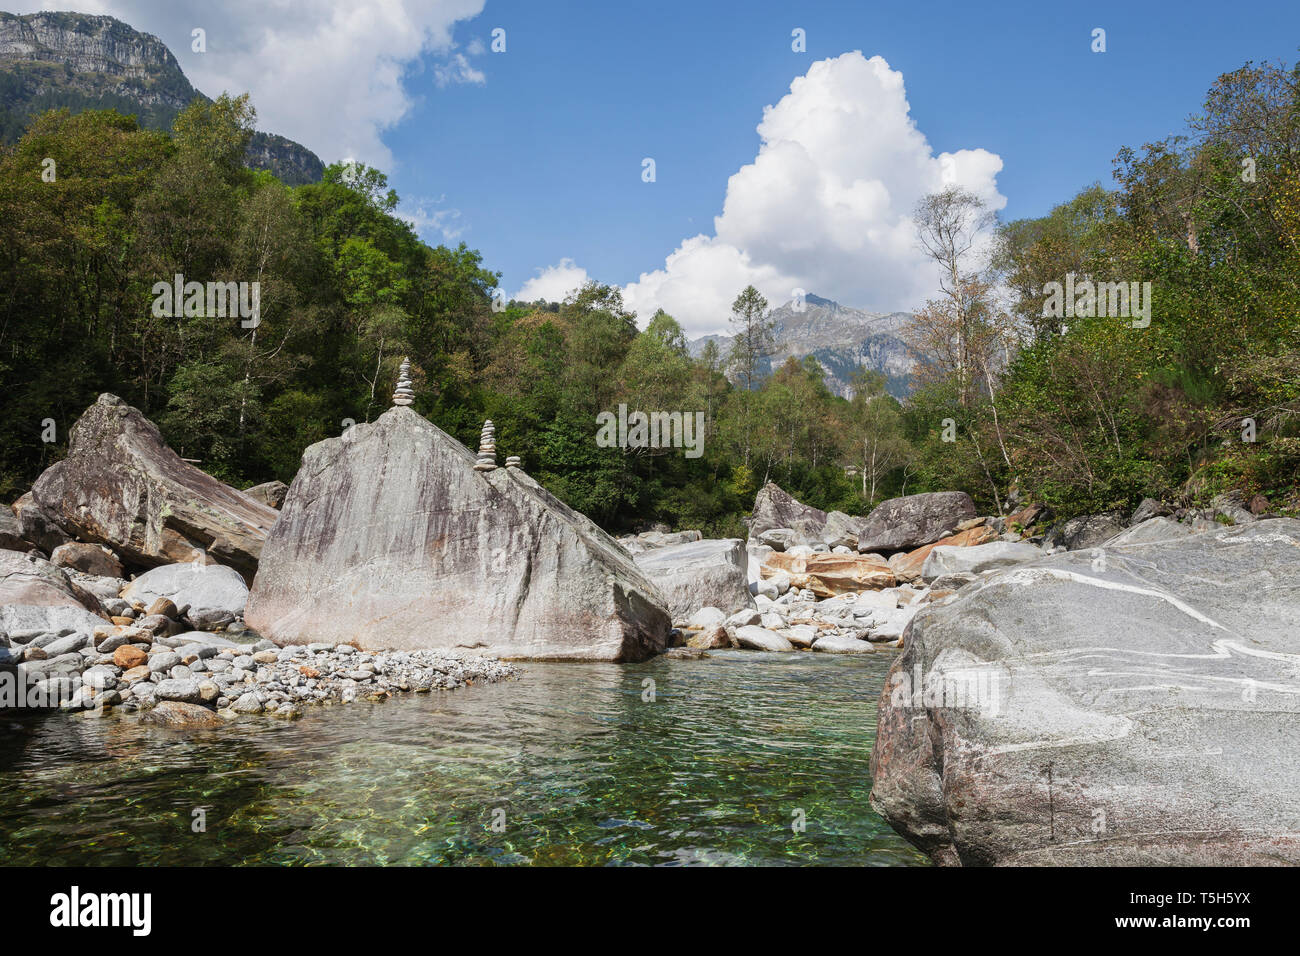 Switzerland, Ticino, Verzasca Valley, Verzasca river and mountain scenery Stock Photo